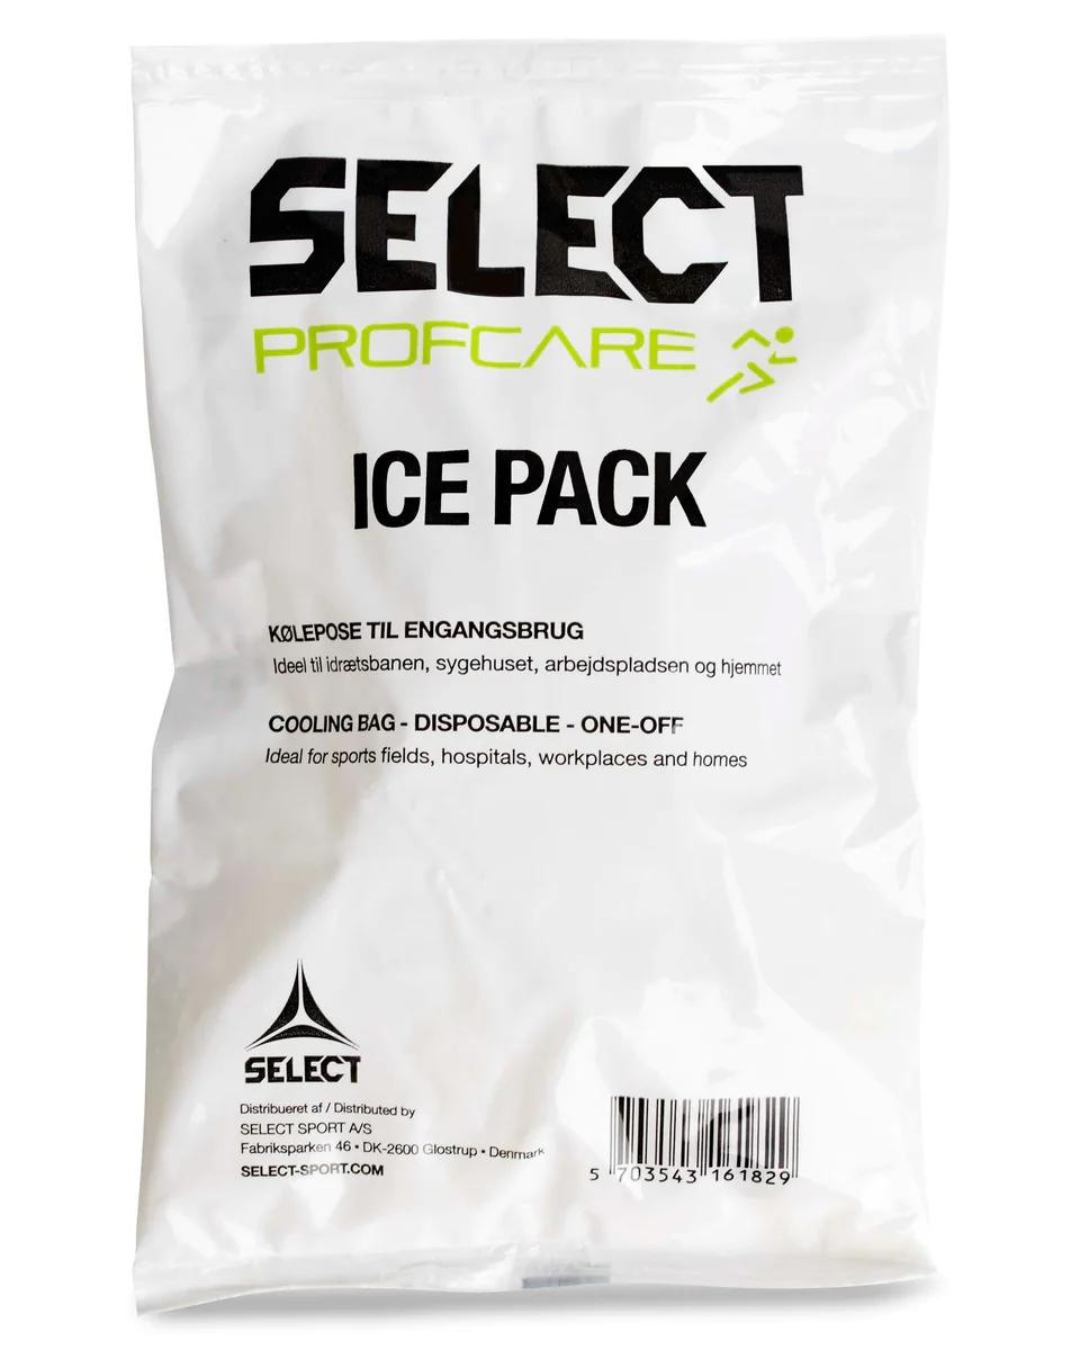 Select Procare Ice Pack Engangsbrug